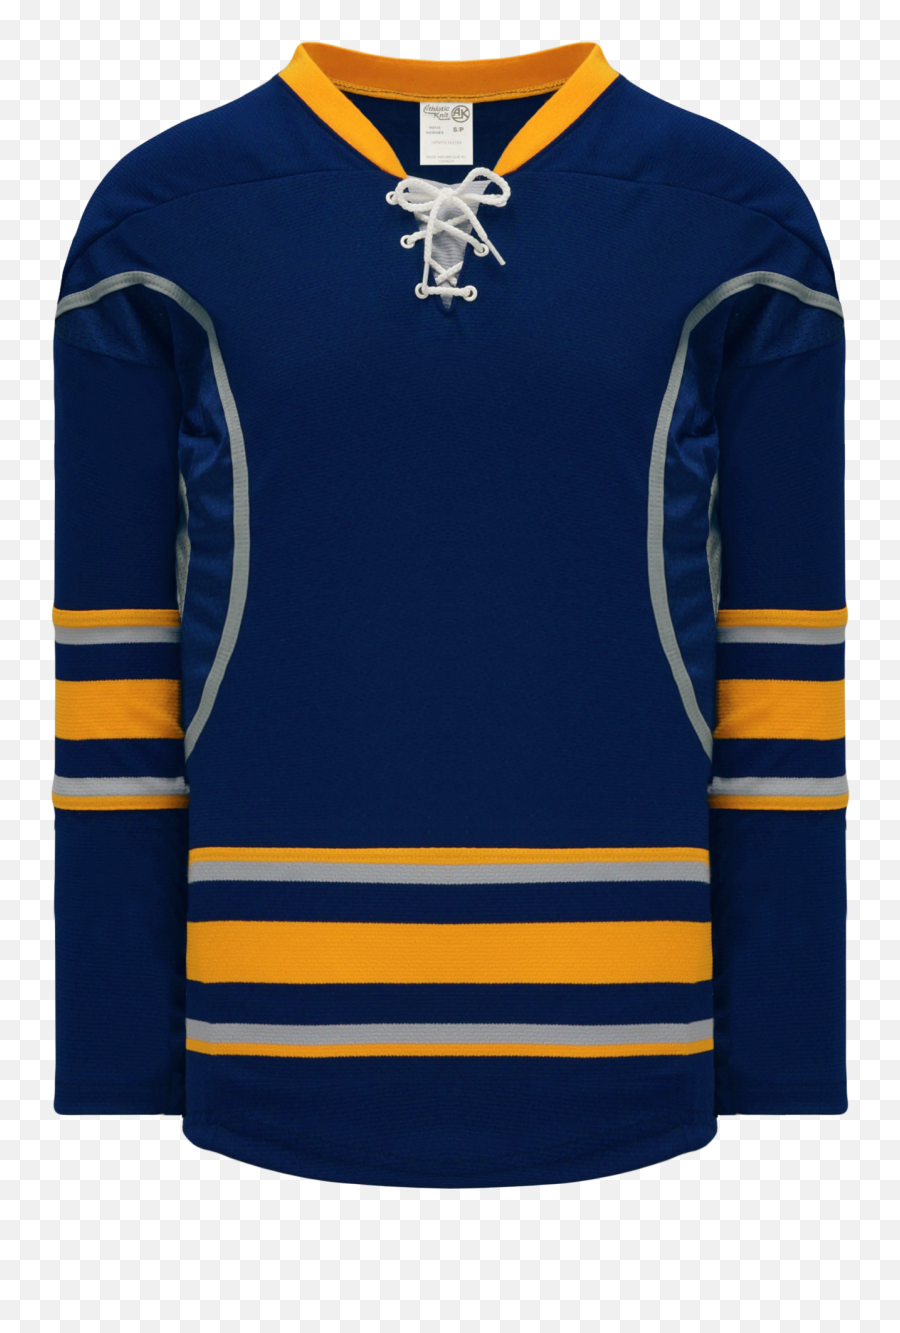 Buffalo Sabres Navy Athletic Knit Hockey Jersey - Hockey Jersey Png,Buffalo Sabres Icon